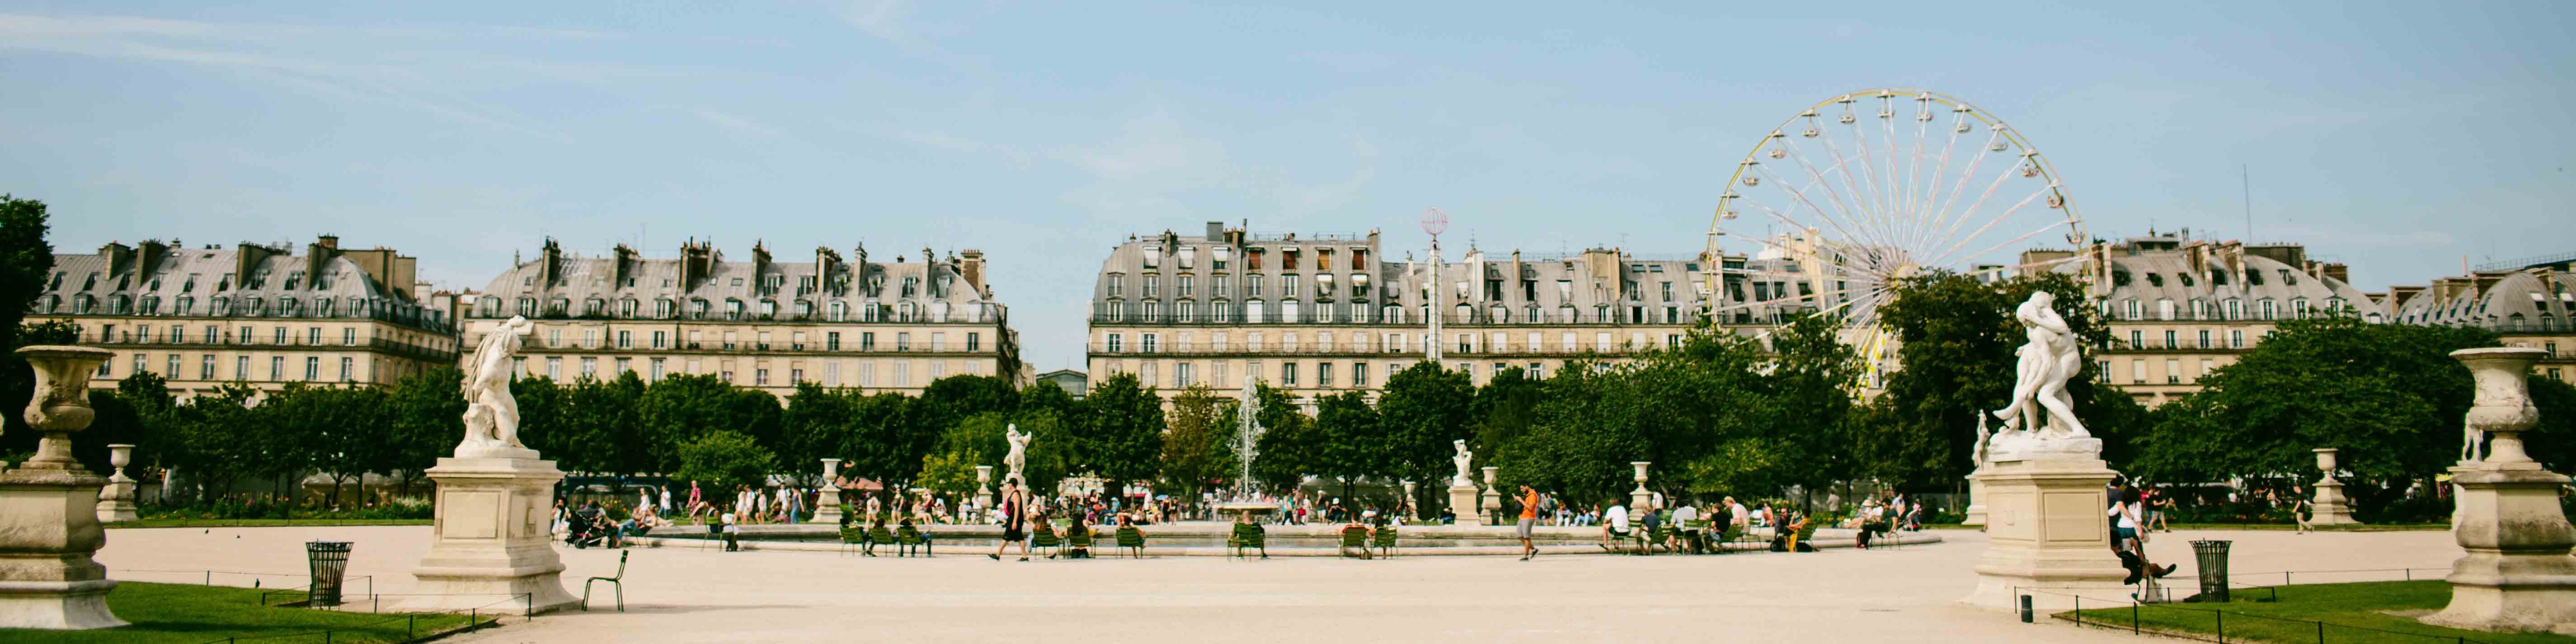 Arty Paris Porte de Versailles by River Hotels  header